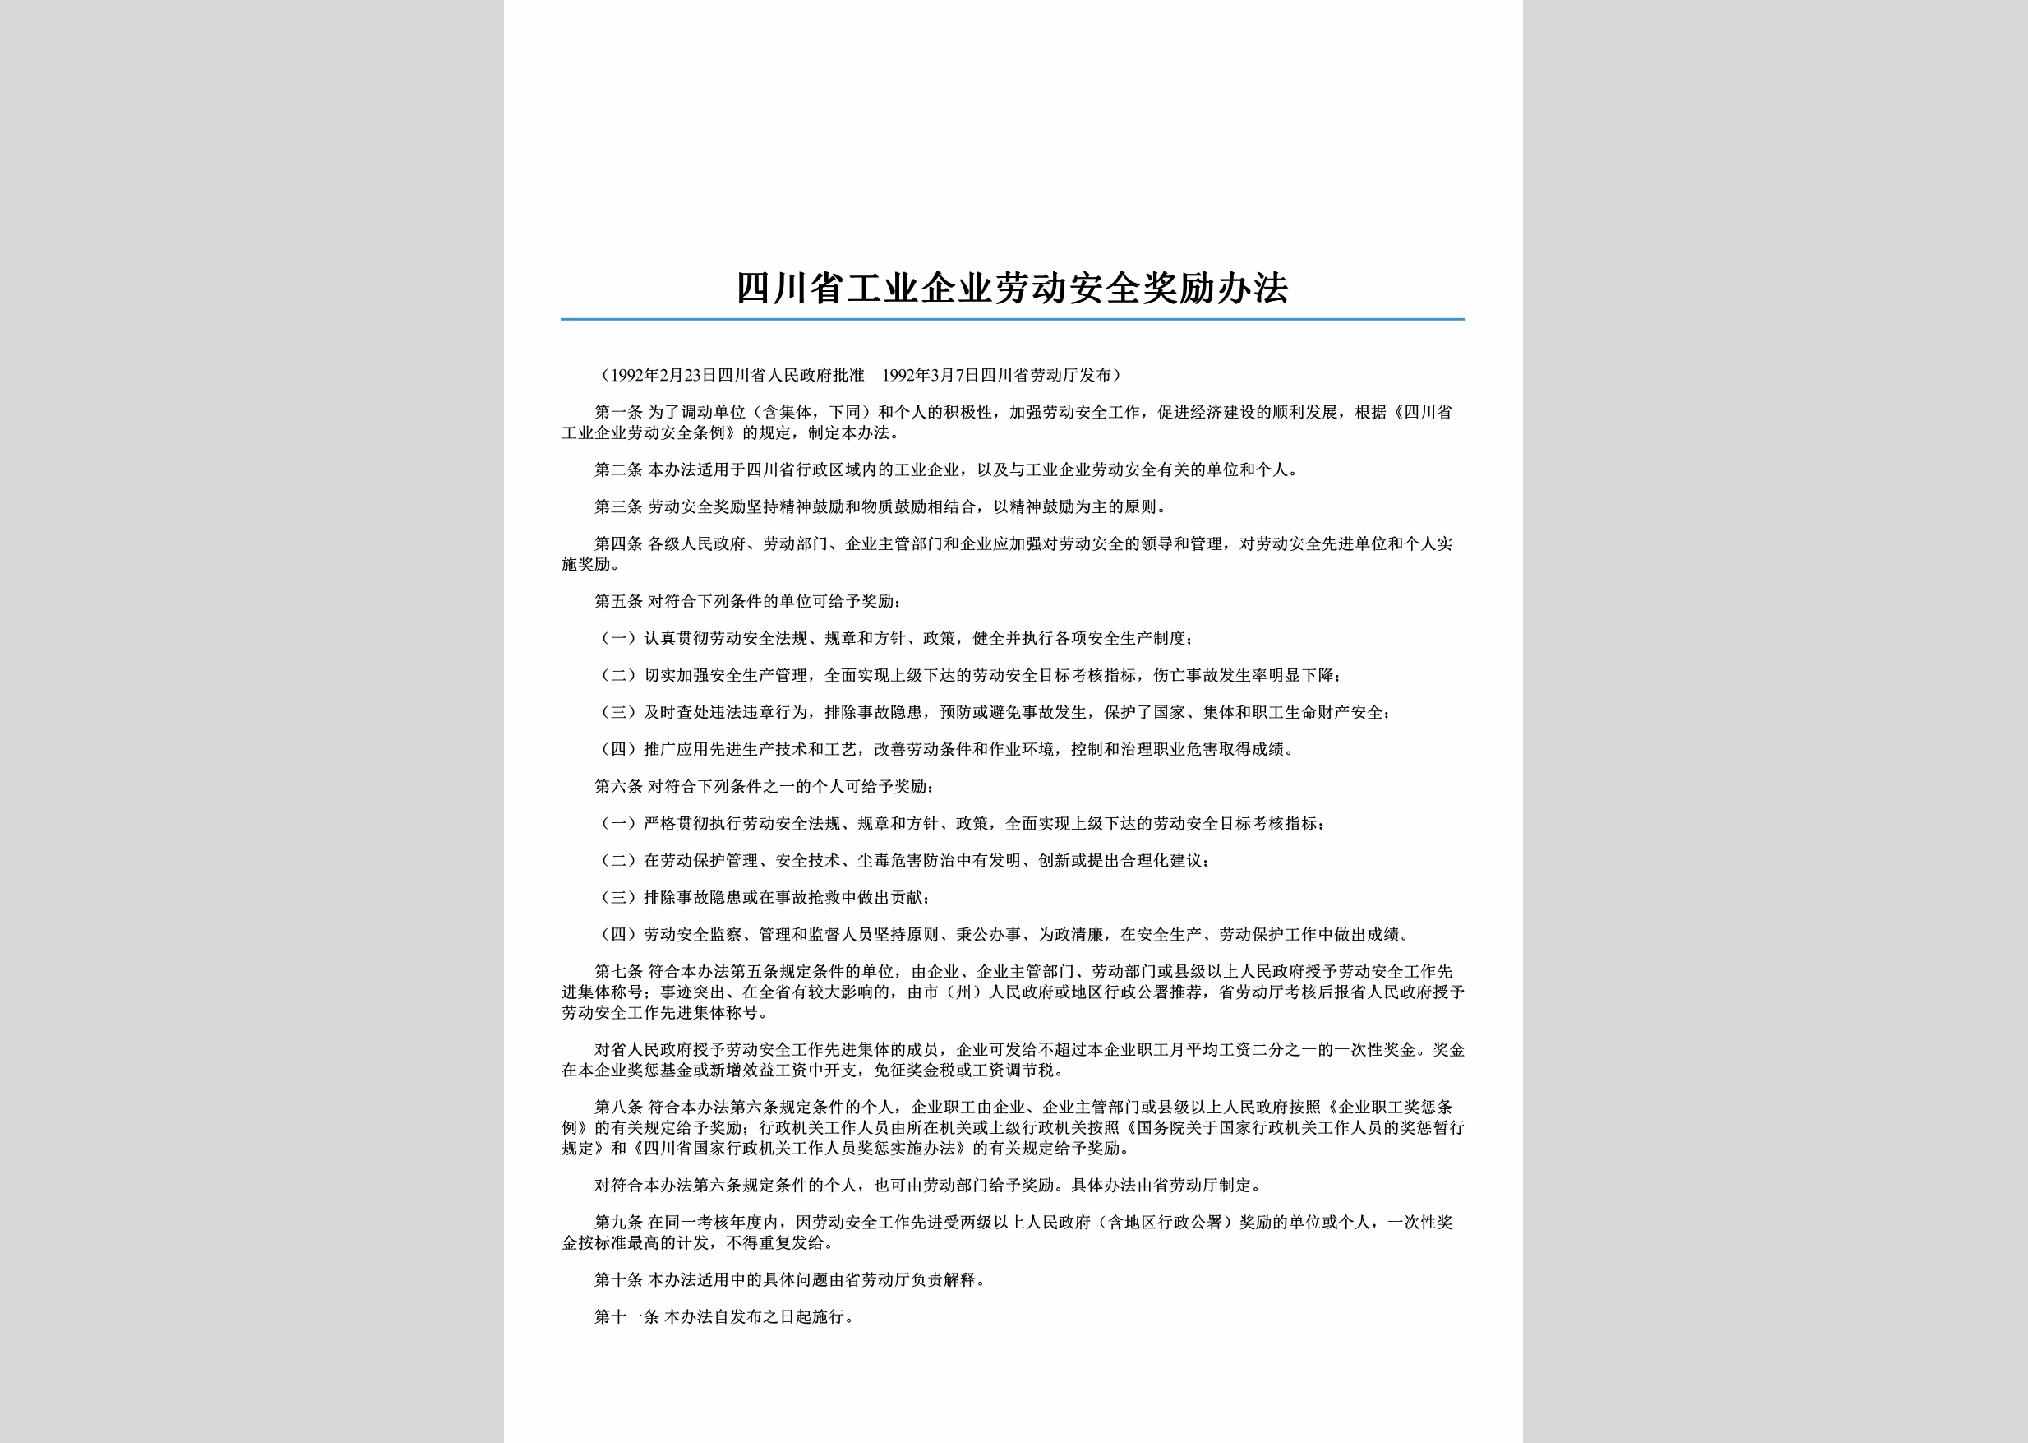 SC-QYLDAQBF-1992：四川省工业企业劳动安全奖励办法